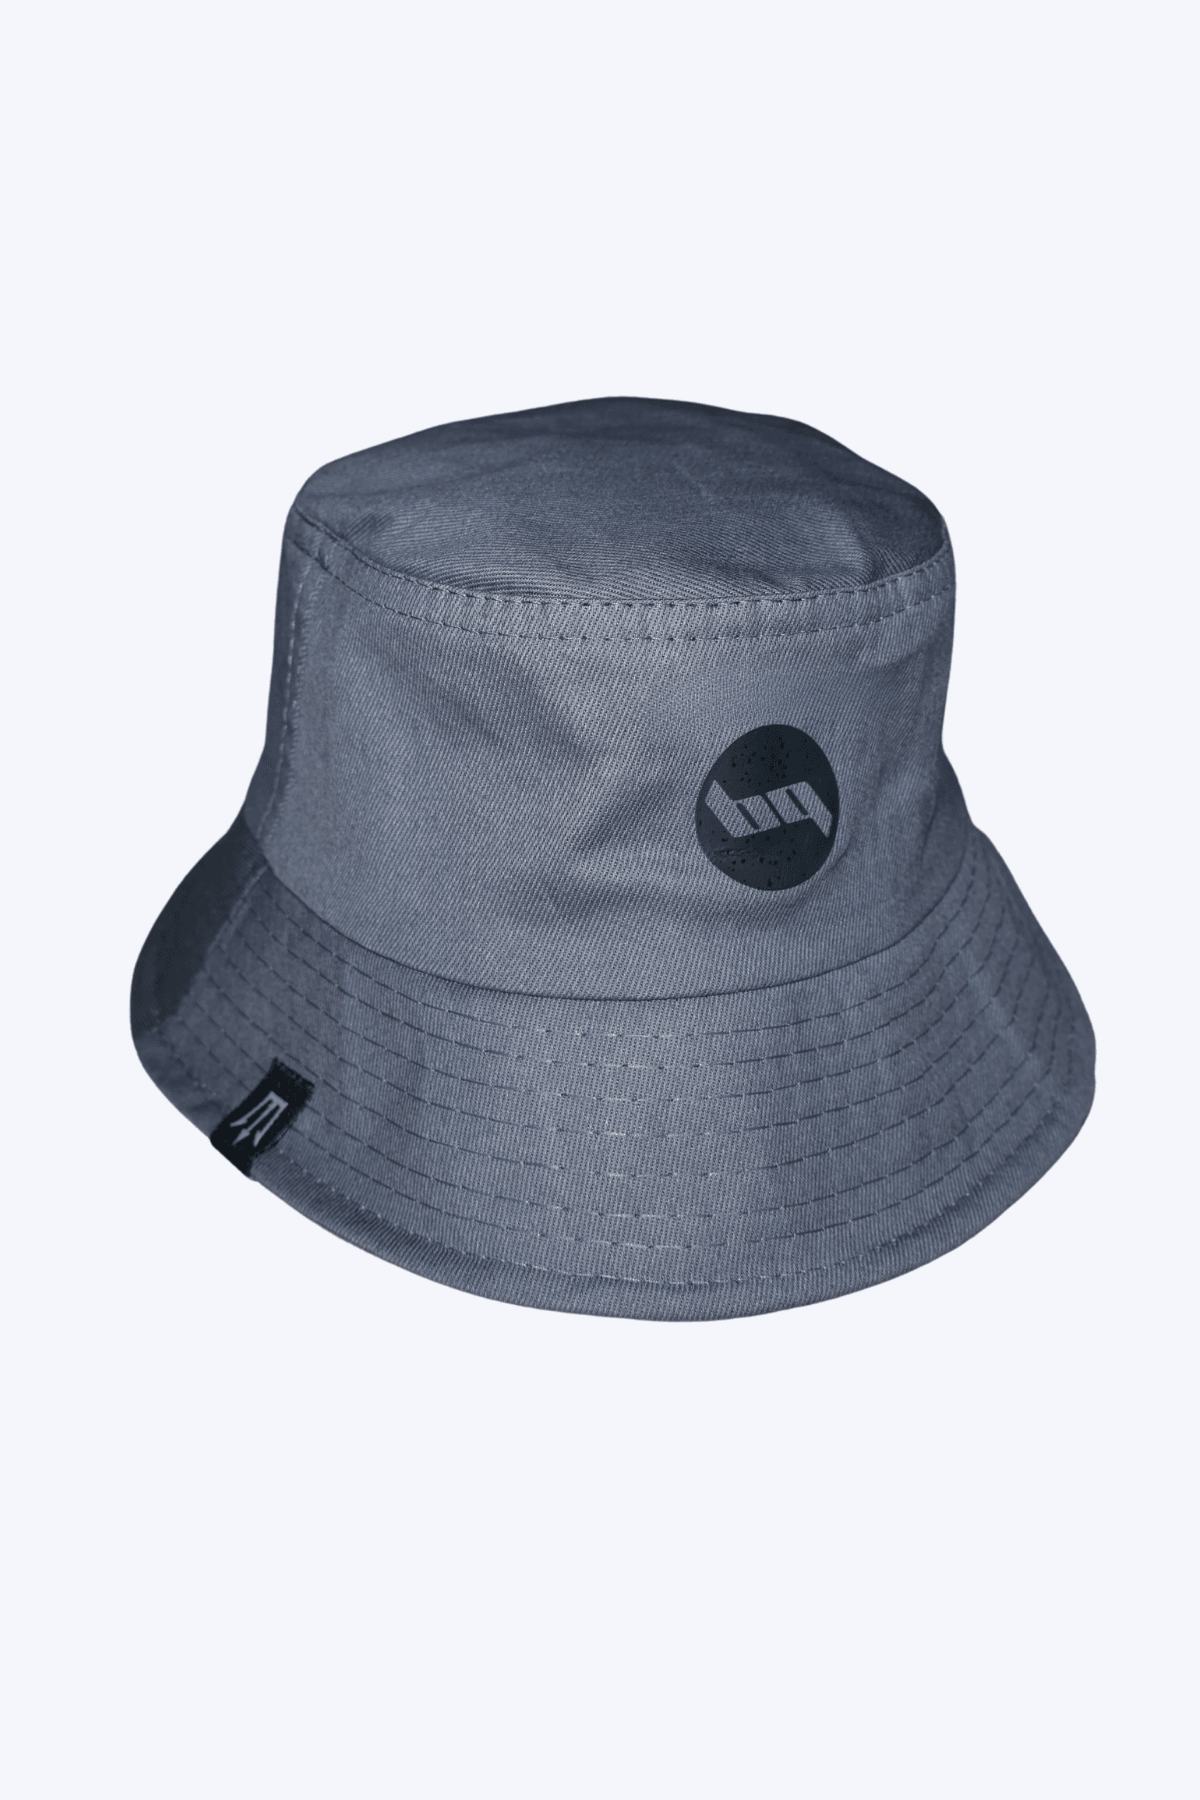 CopperHead Bucket Hat  - GREY